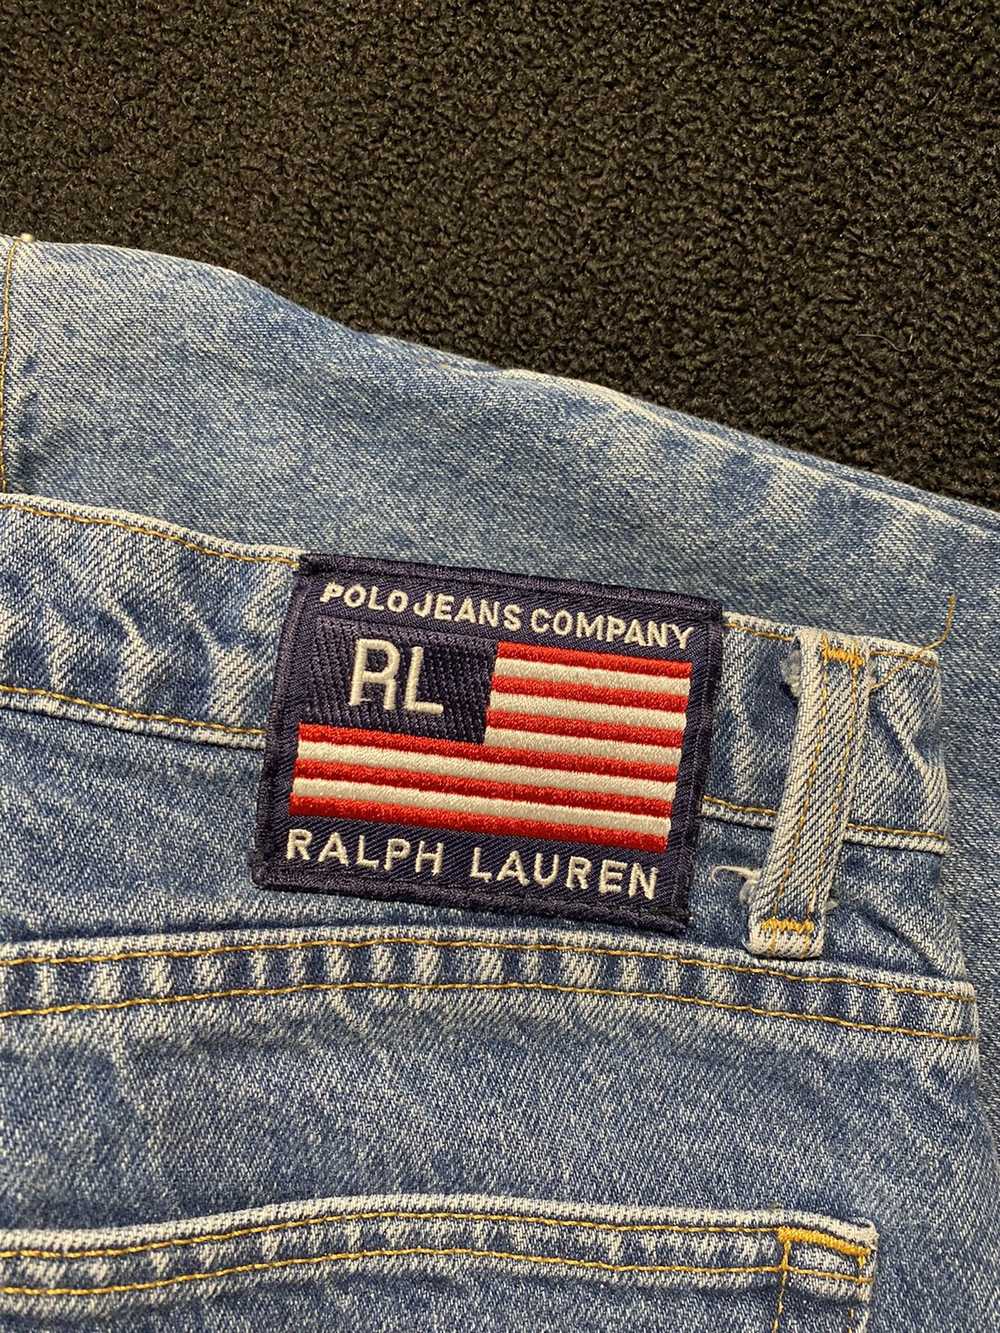 Polo Ralph Lauren Polo Ralph Lauren Jeans - image 4